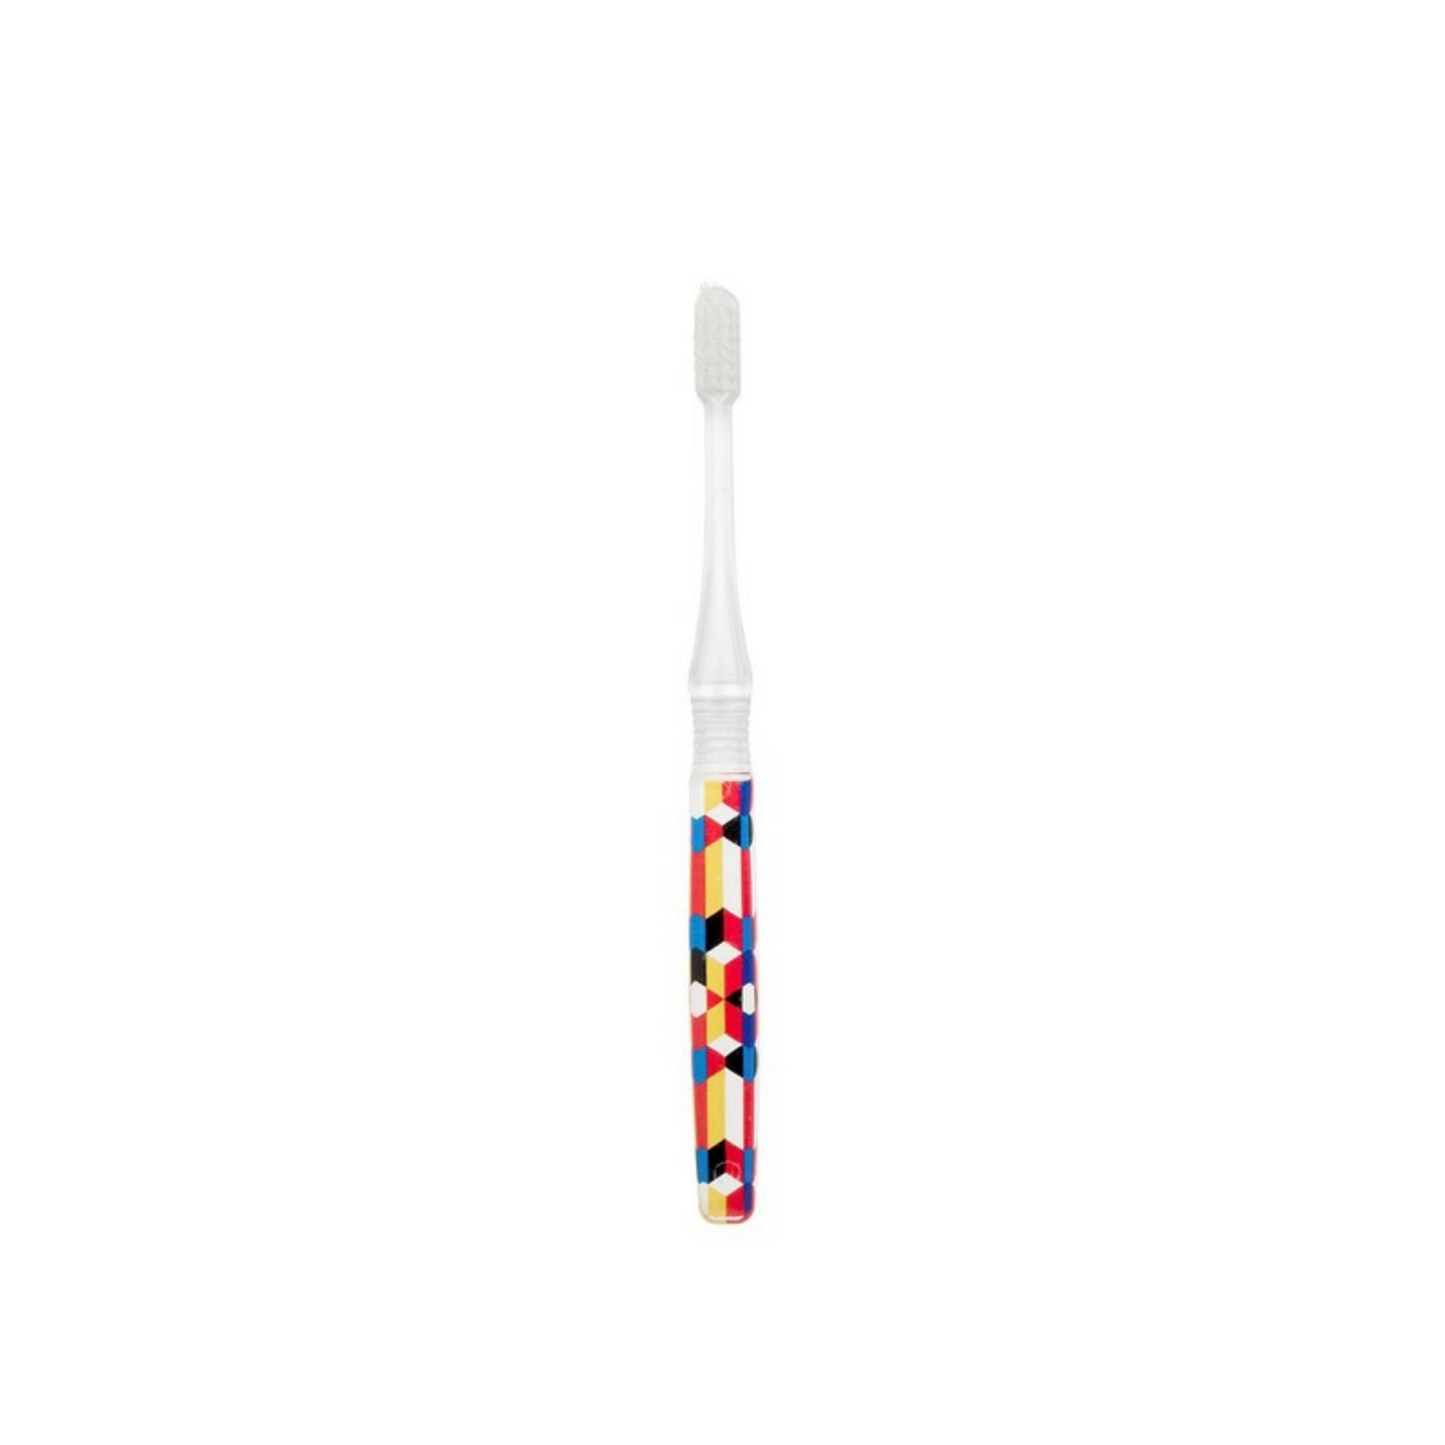 Primary Image of Toothbrush - Urban